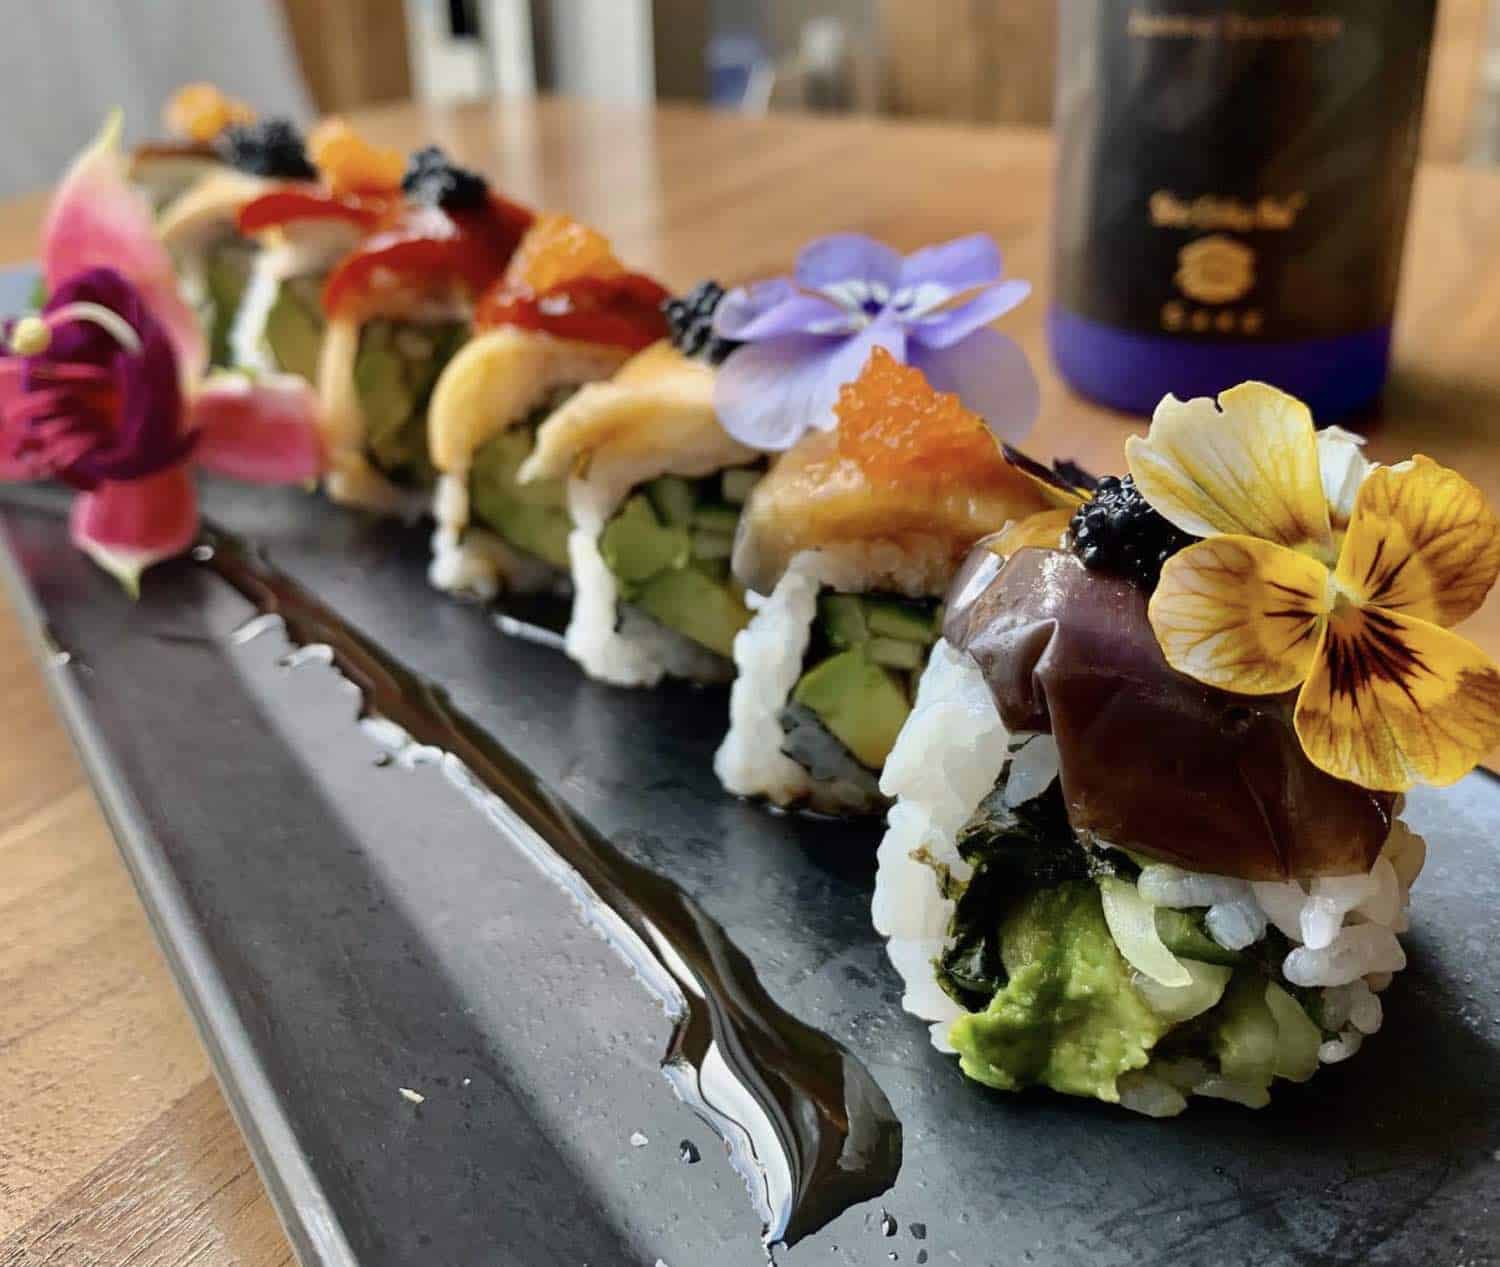 Shizen vegan sushi restaurant in sf california